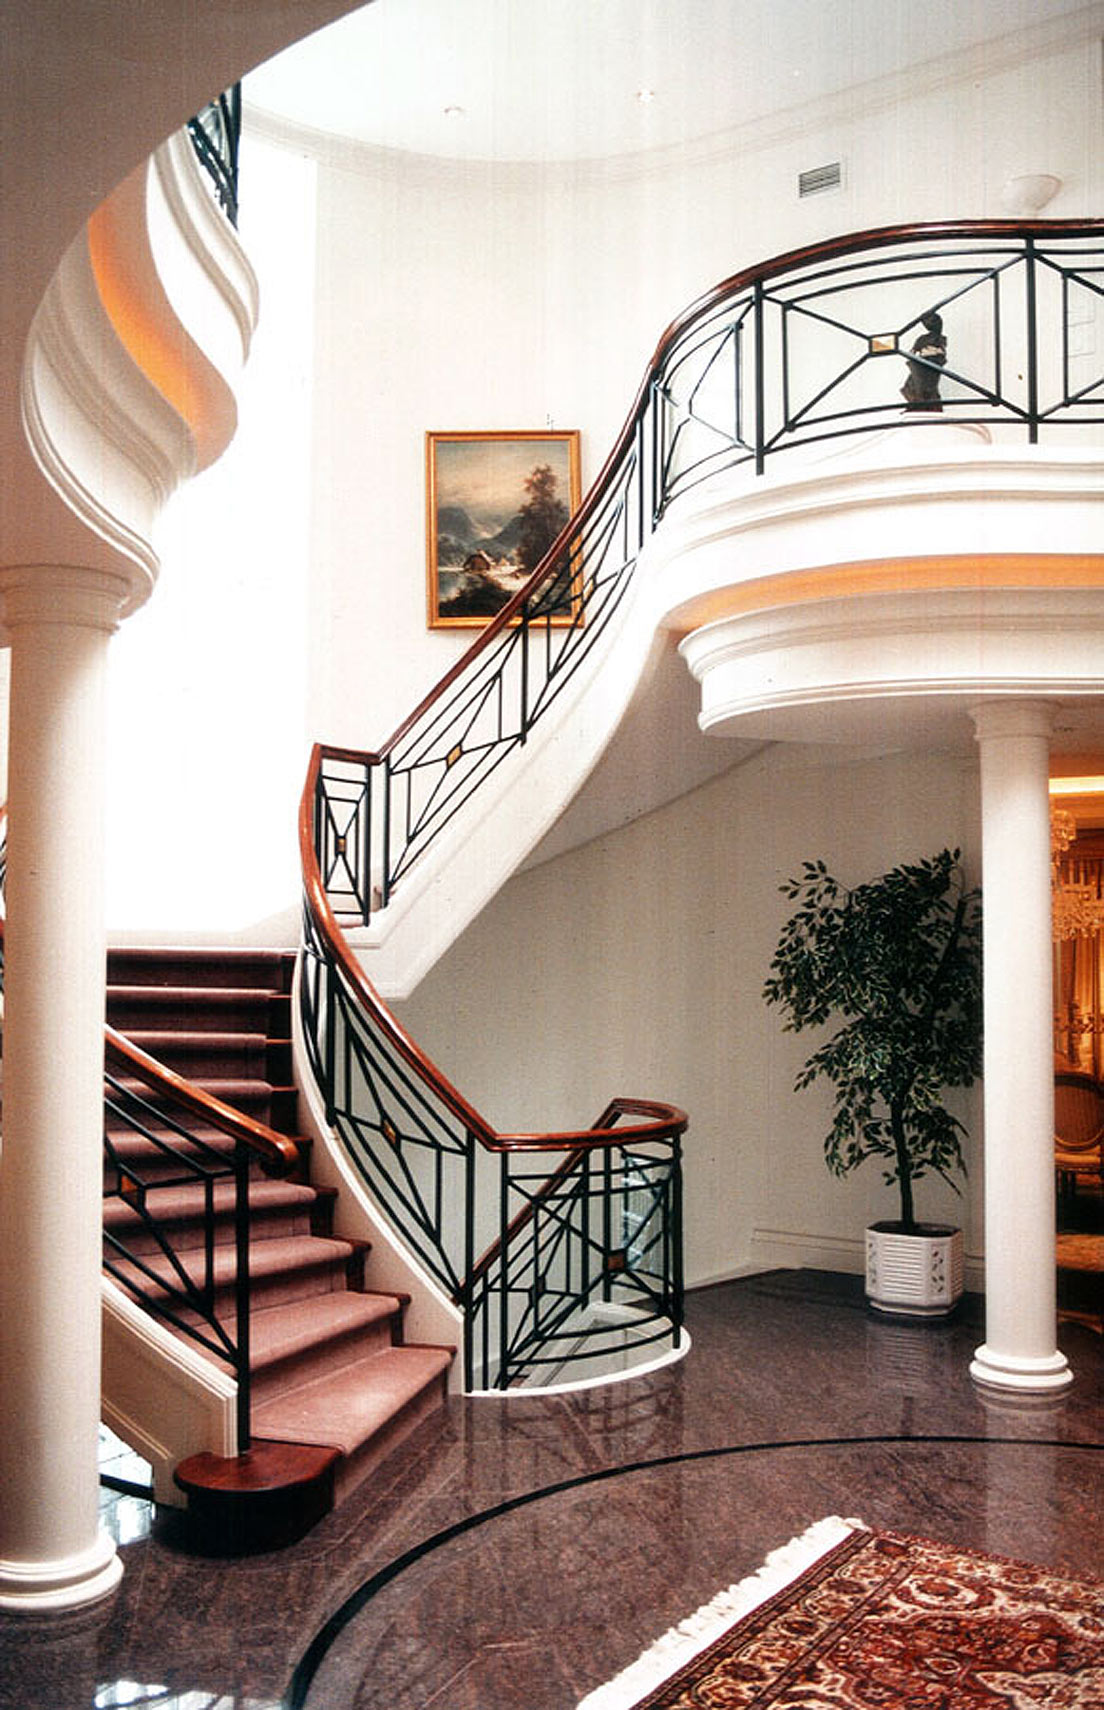 39-interiordesign-transtitional-MakowArchitects-012-staircase